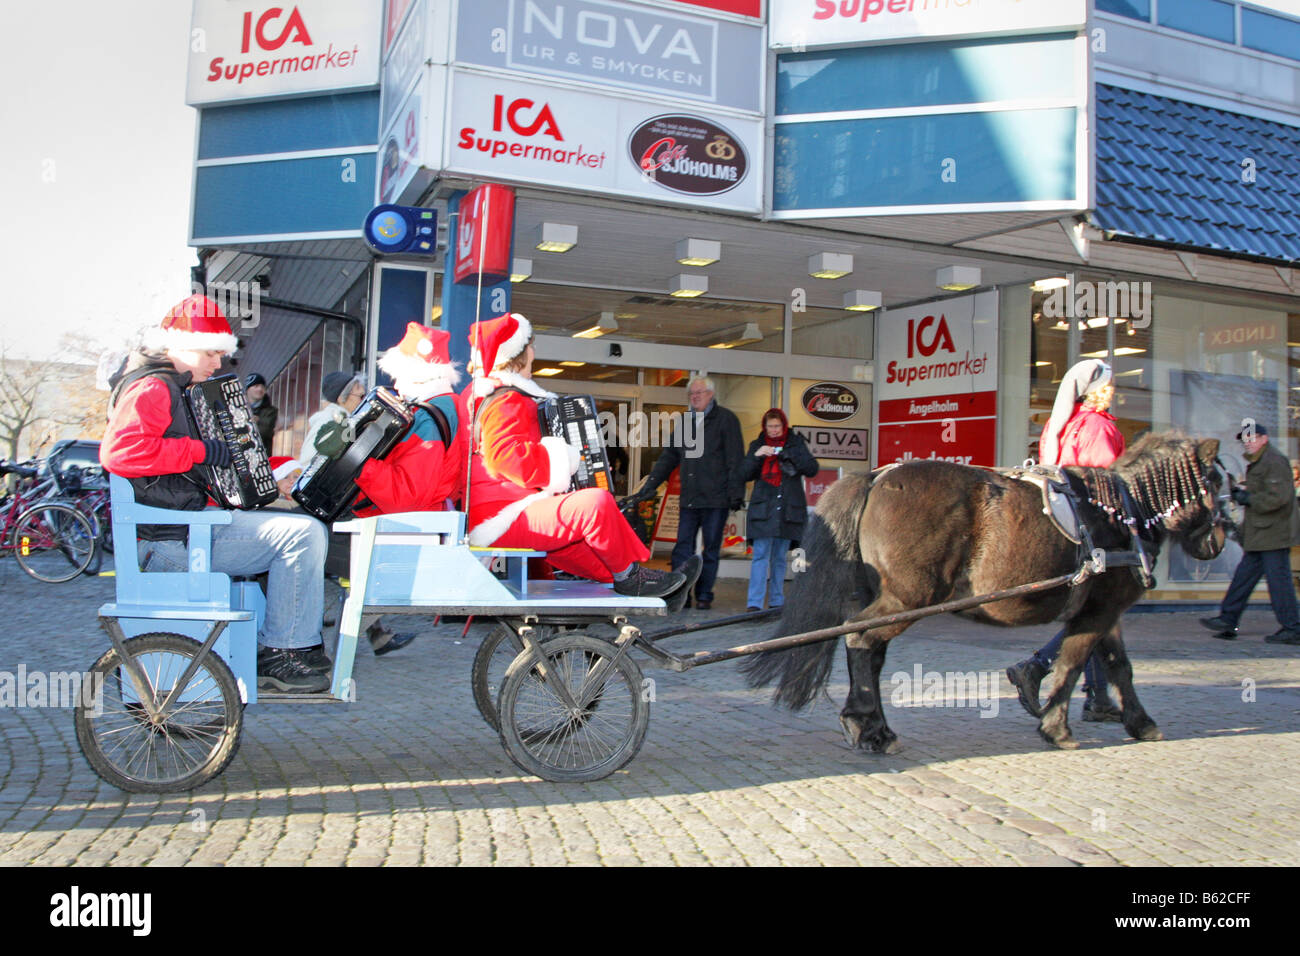 Santa Claus sueco desfile a caballo y vagón svensk tomteparad med häst och vagn Foto de stock